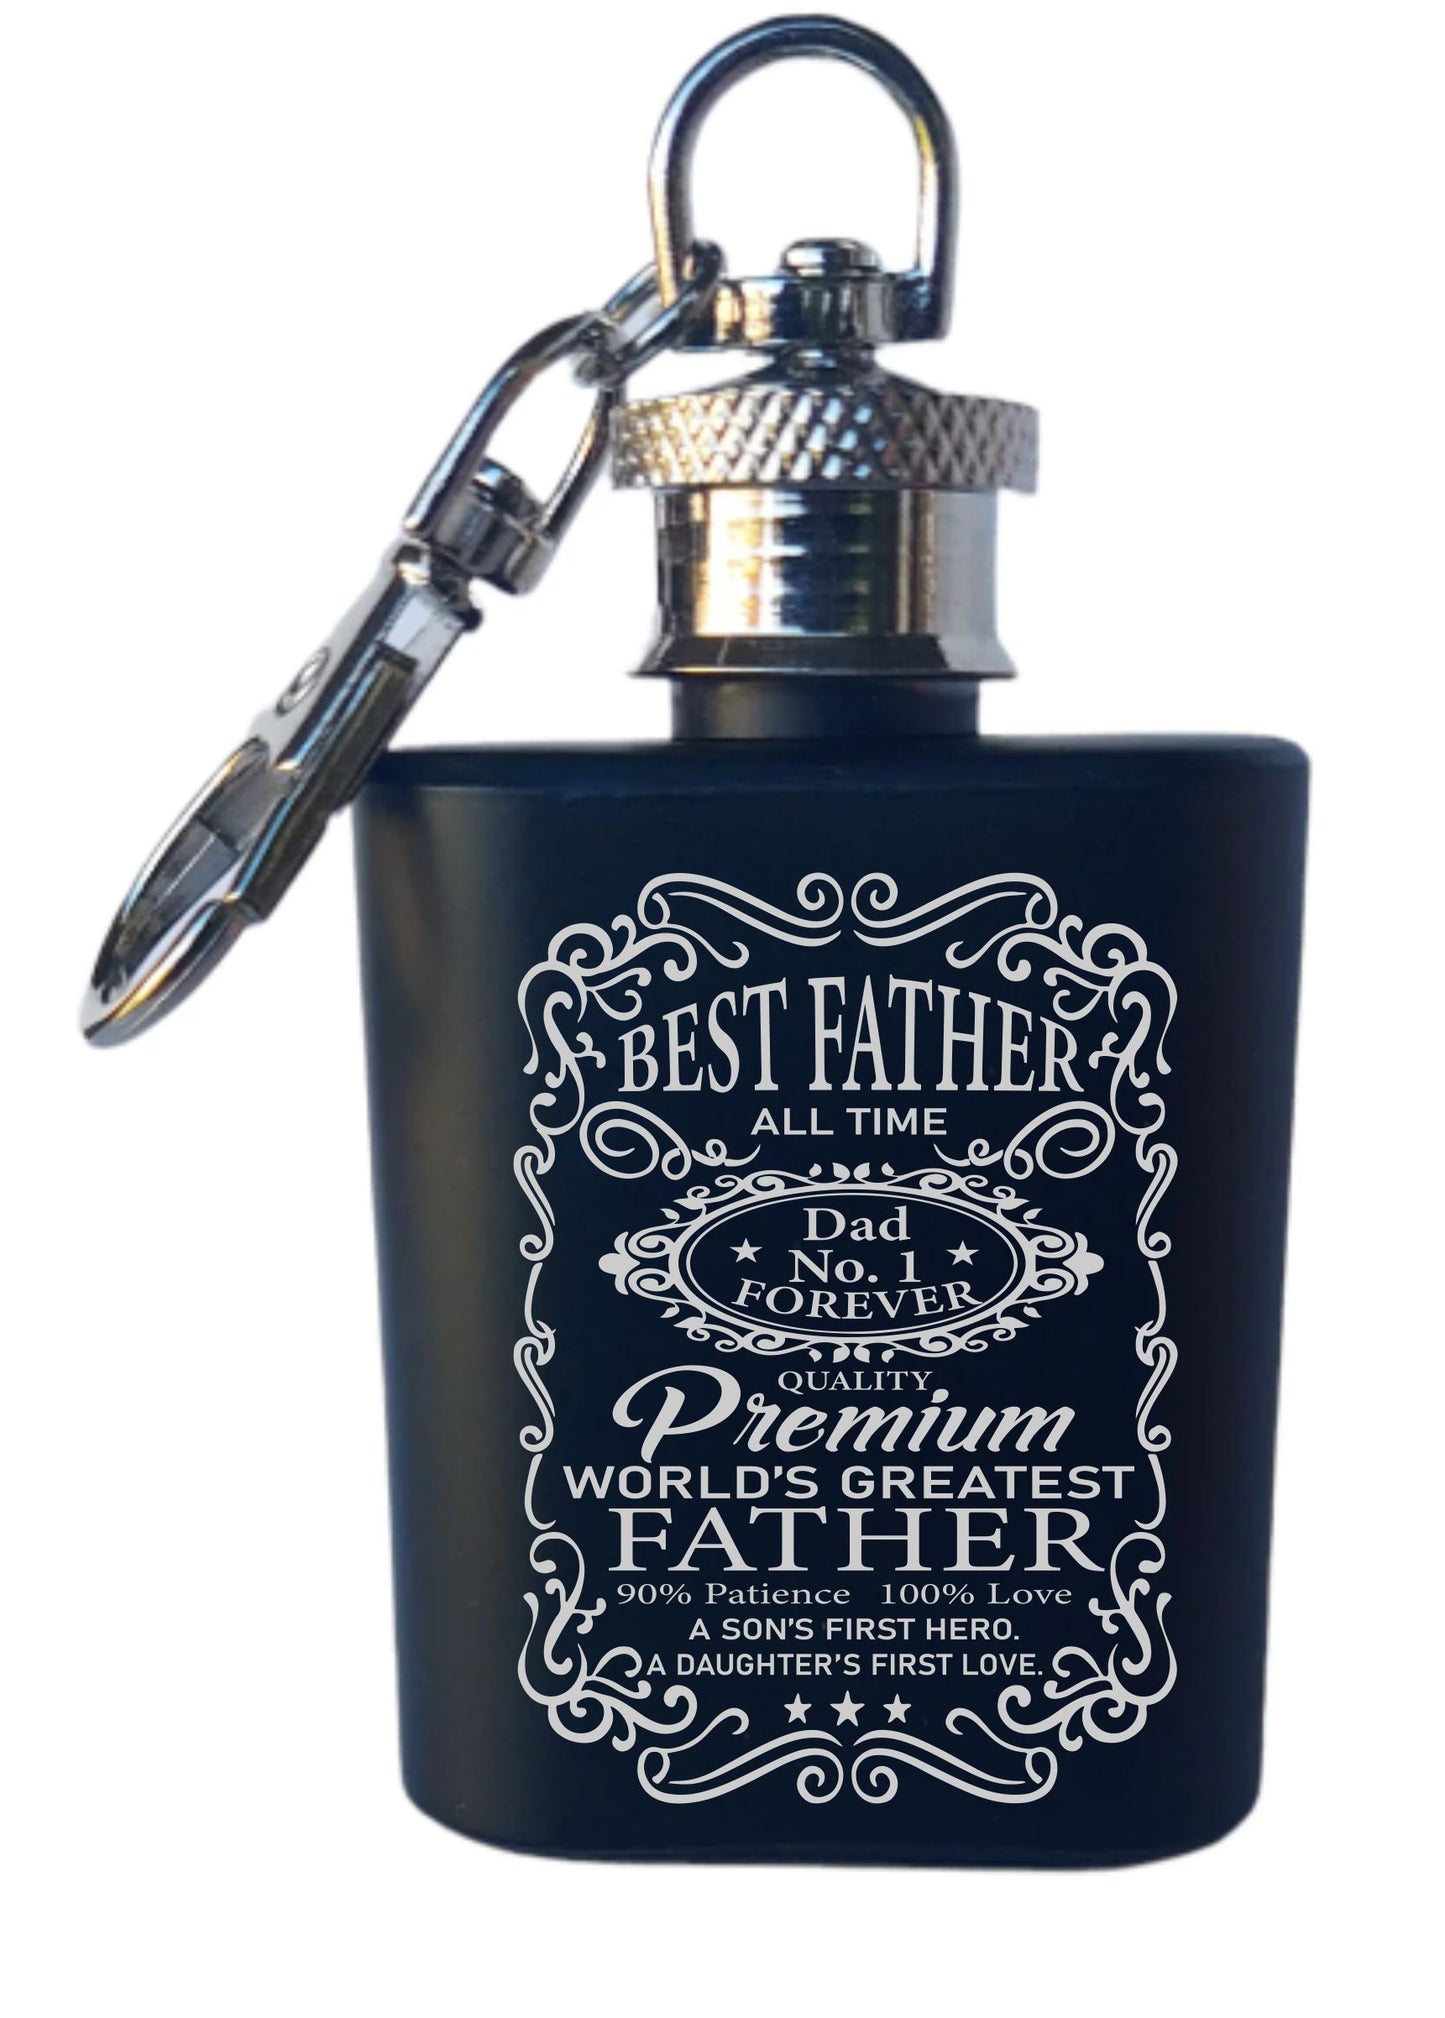 Best father mini flask keyring